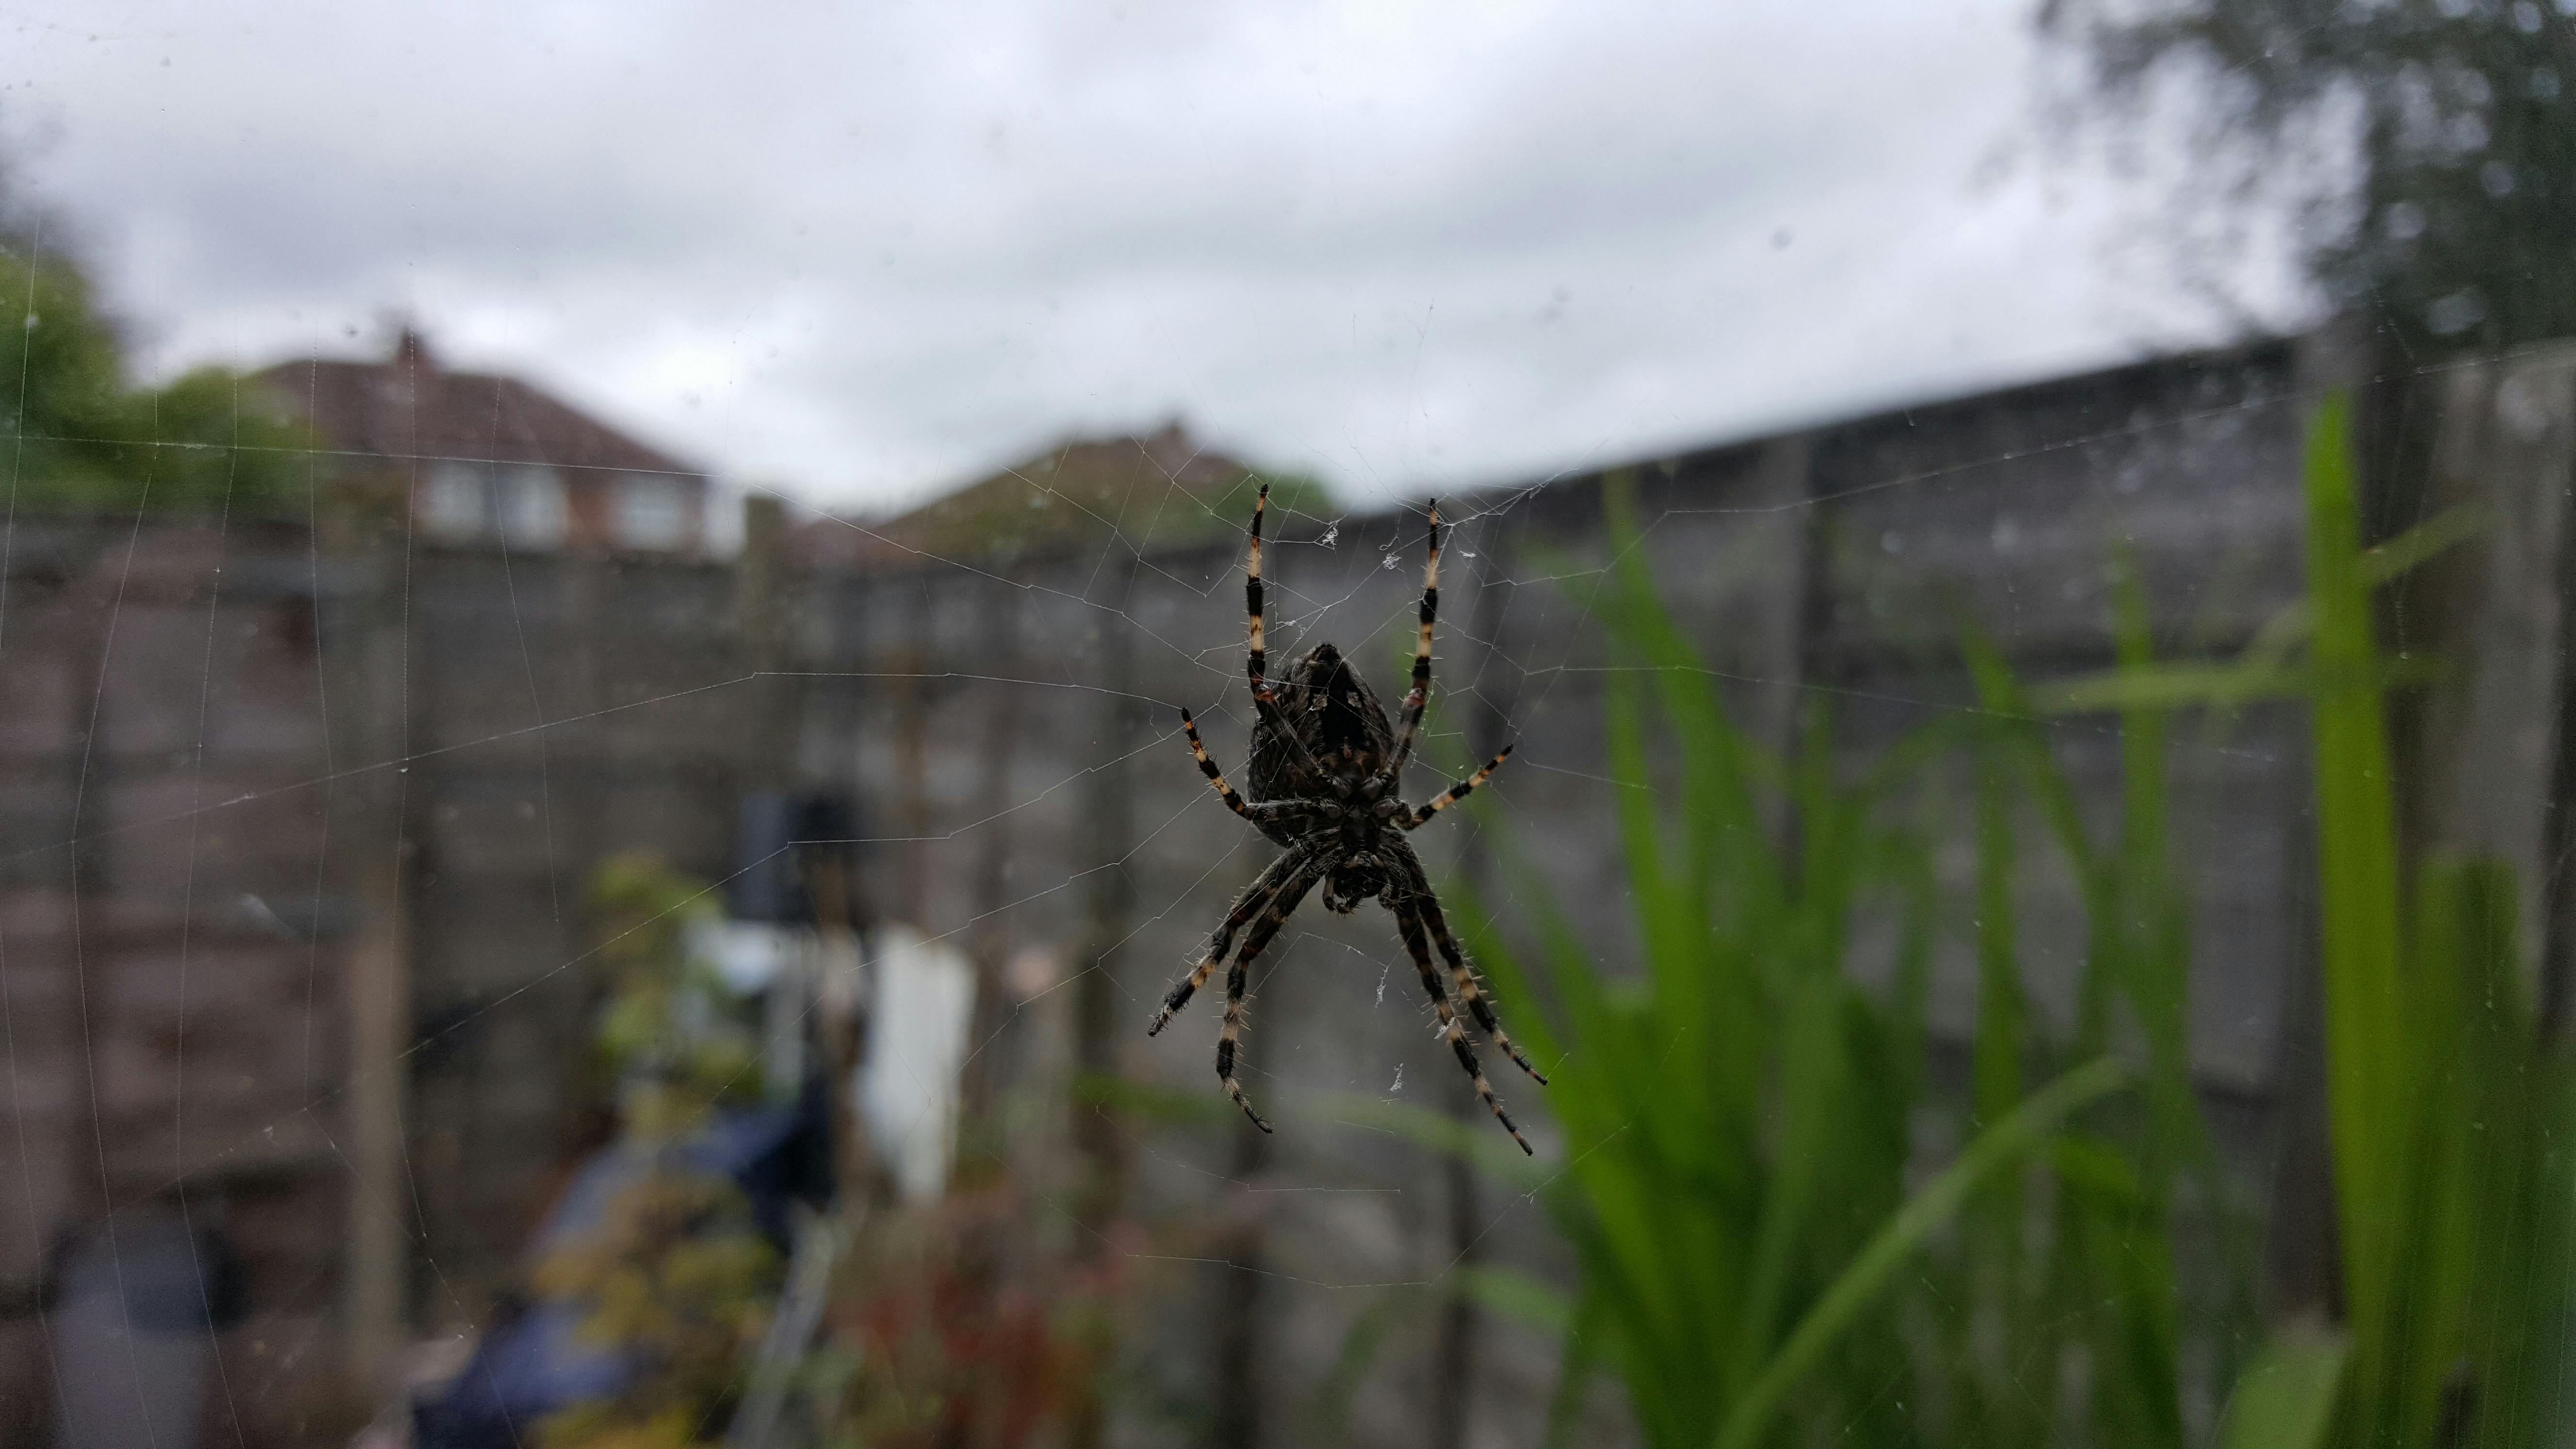 Free stock photo of araneus diadematus, garden spider, spider